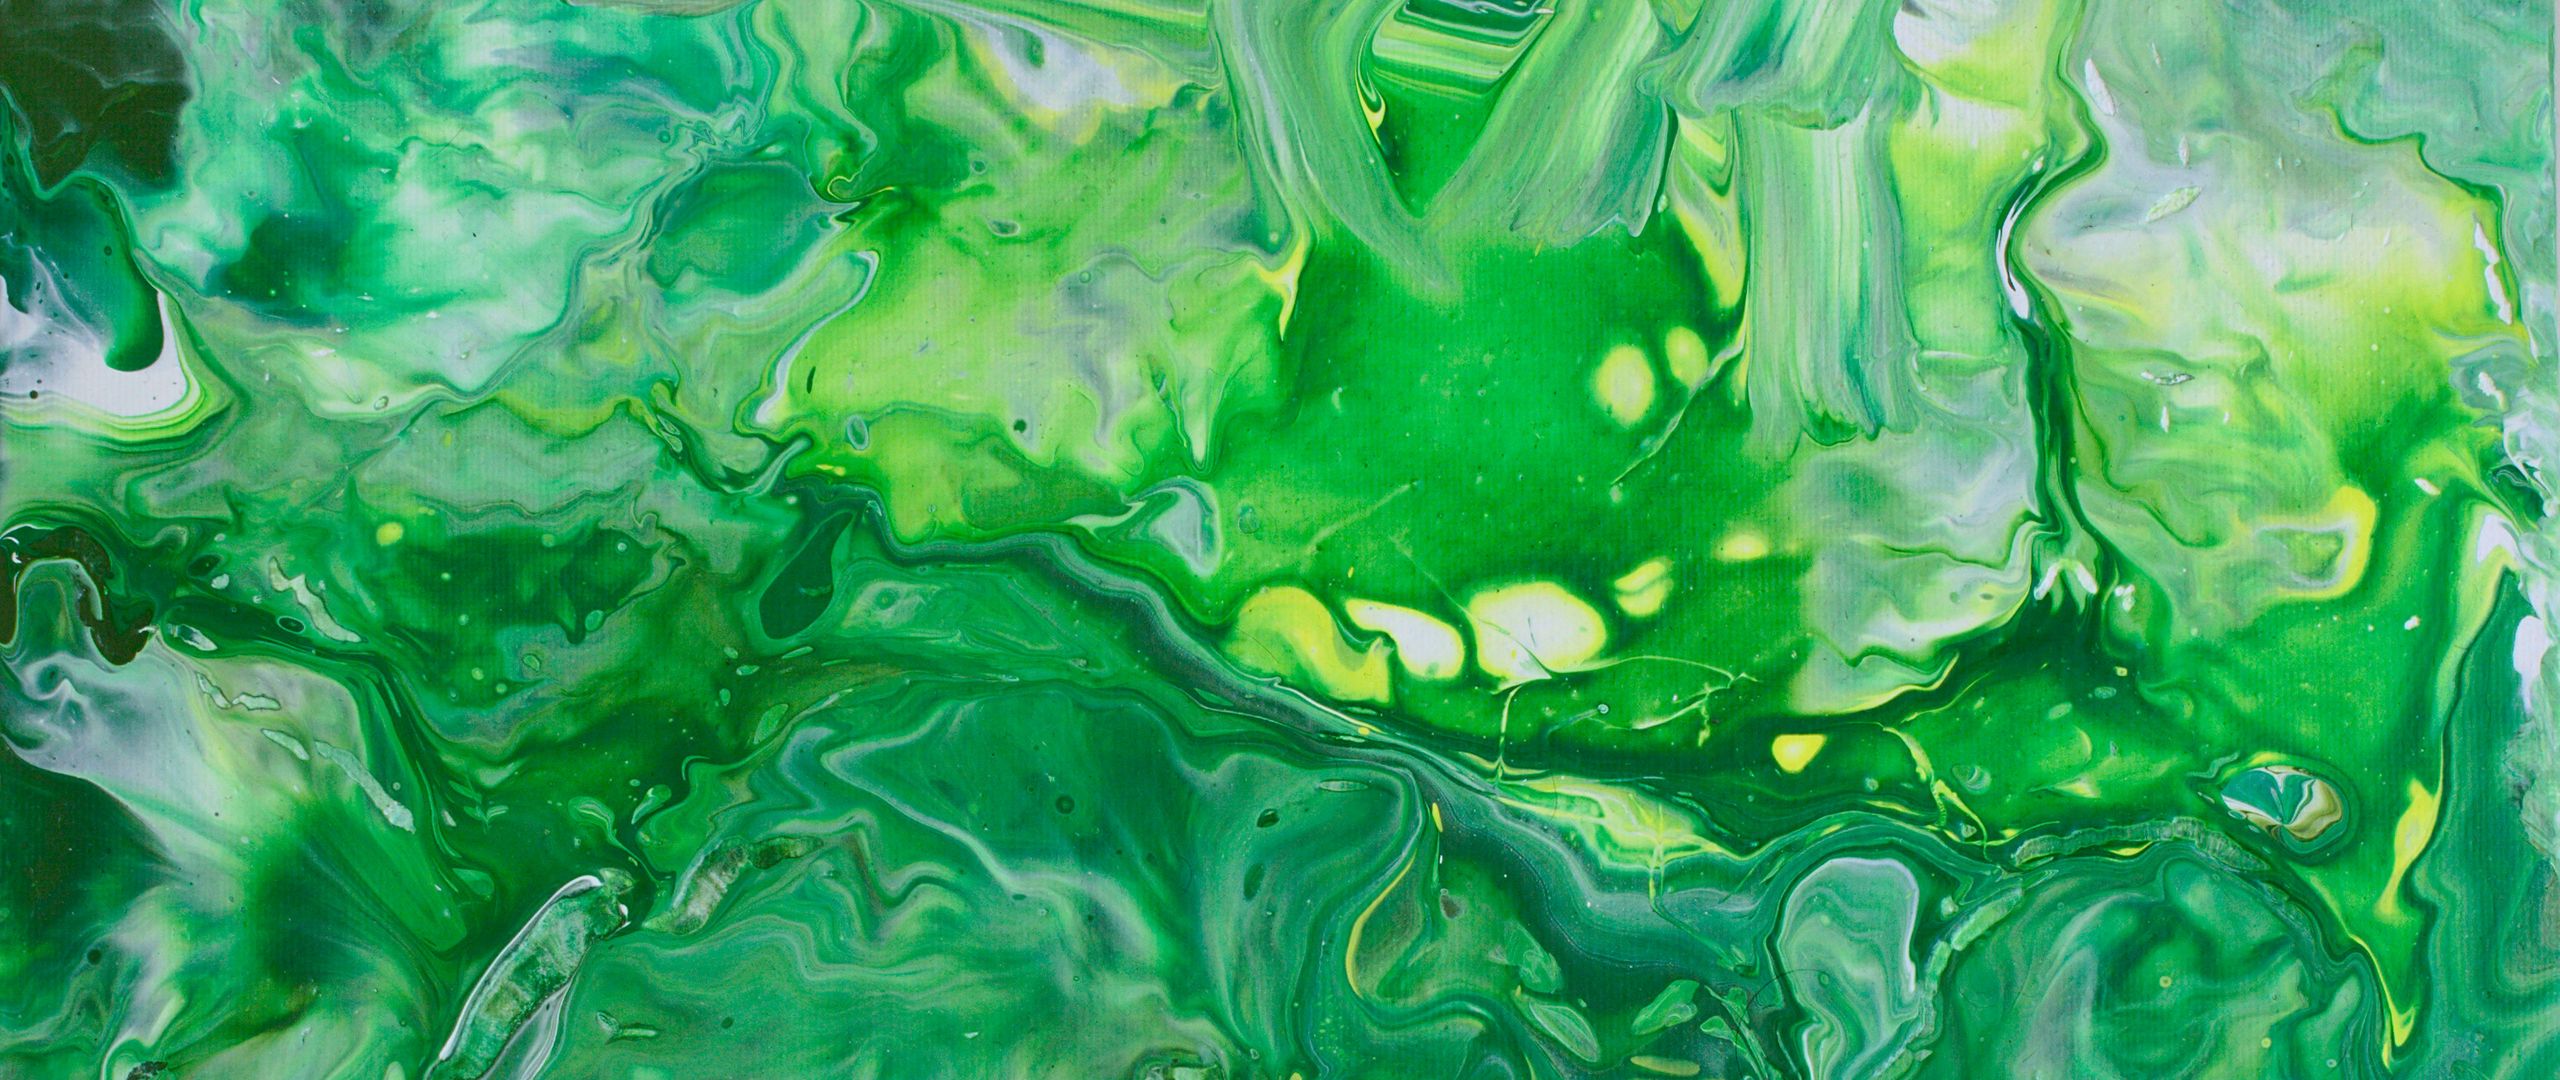 Green paint stains Wallpaper 2k Quad HD ID:10122